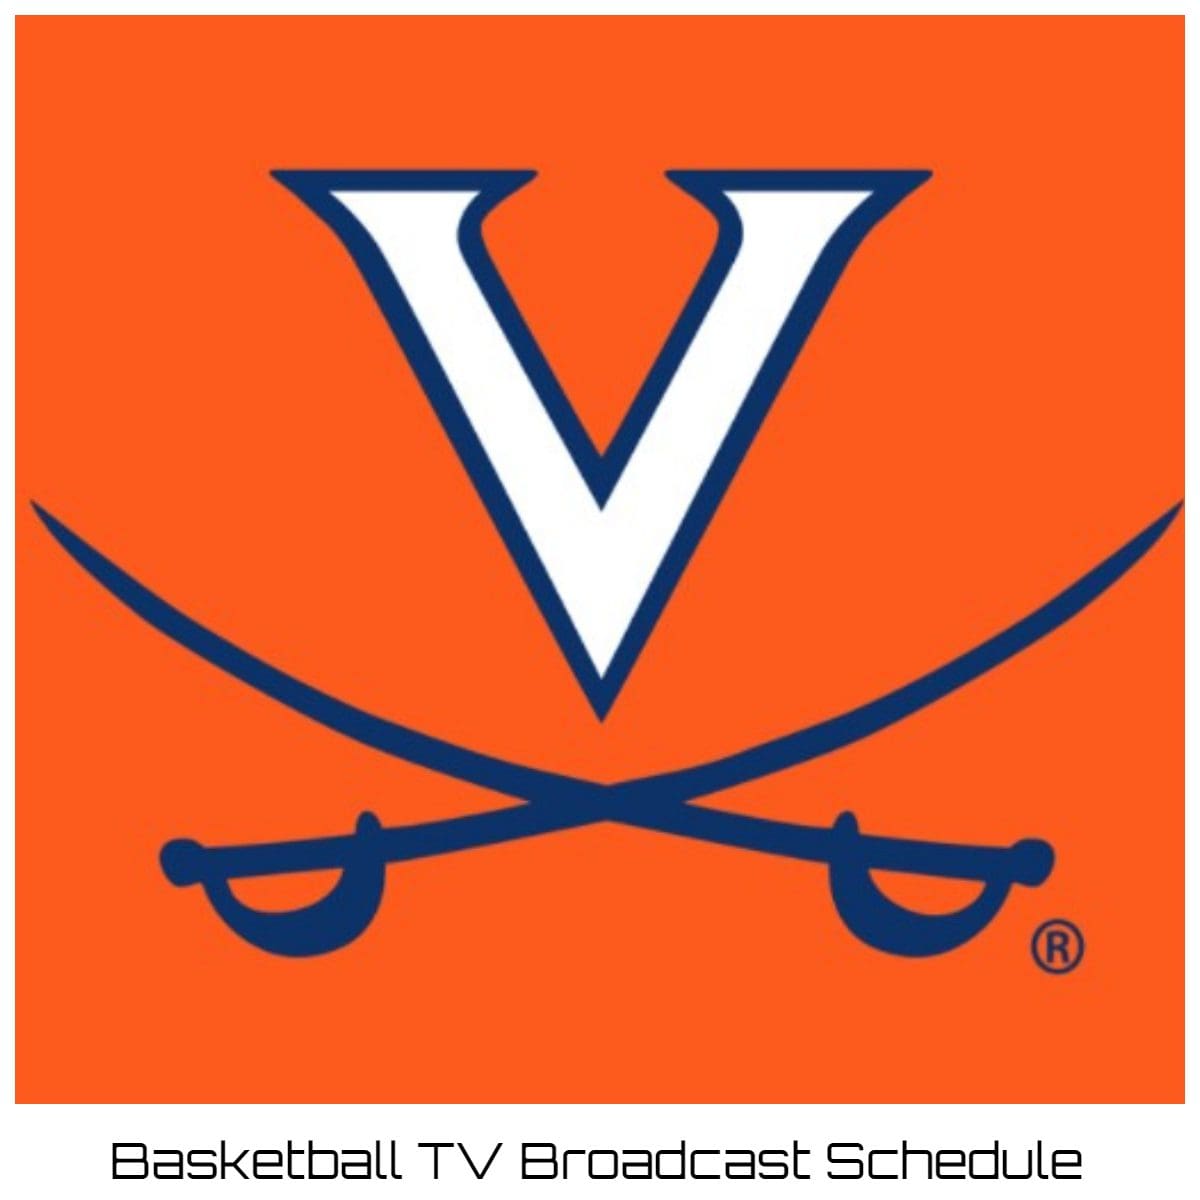 Virginia Cavaliers Basketball TV Broadcast Schedule